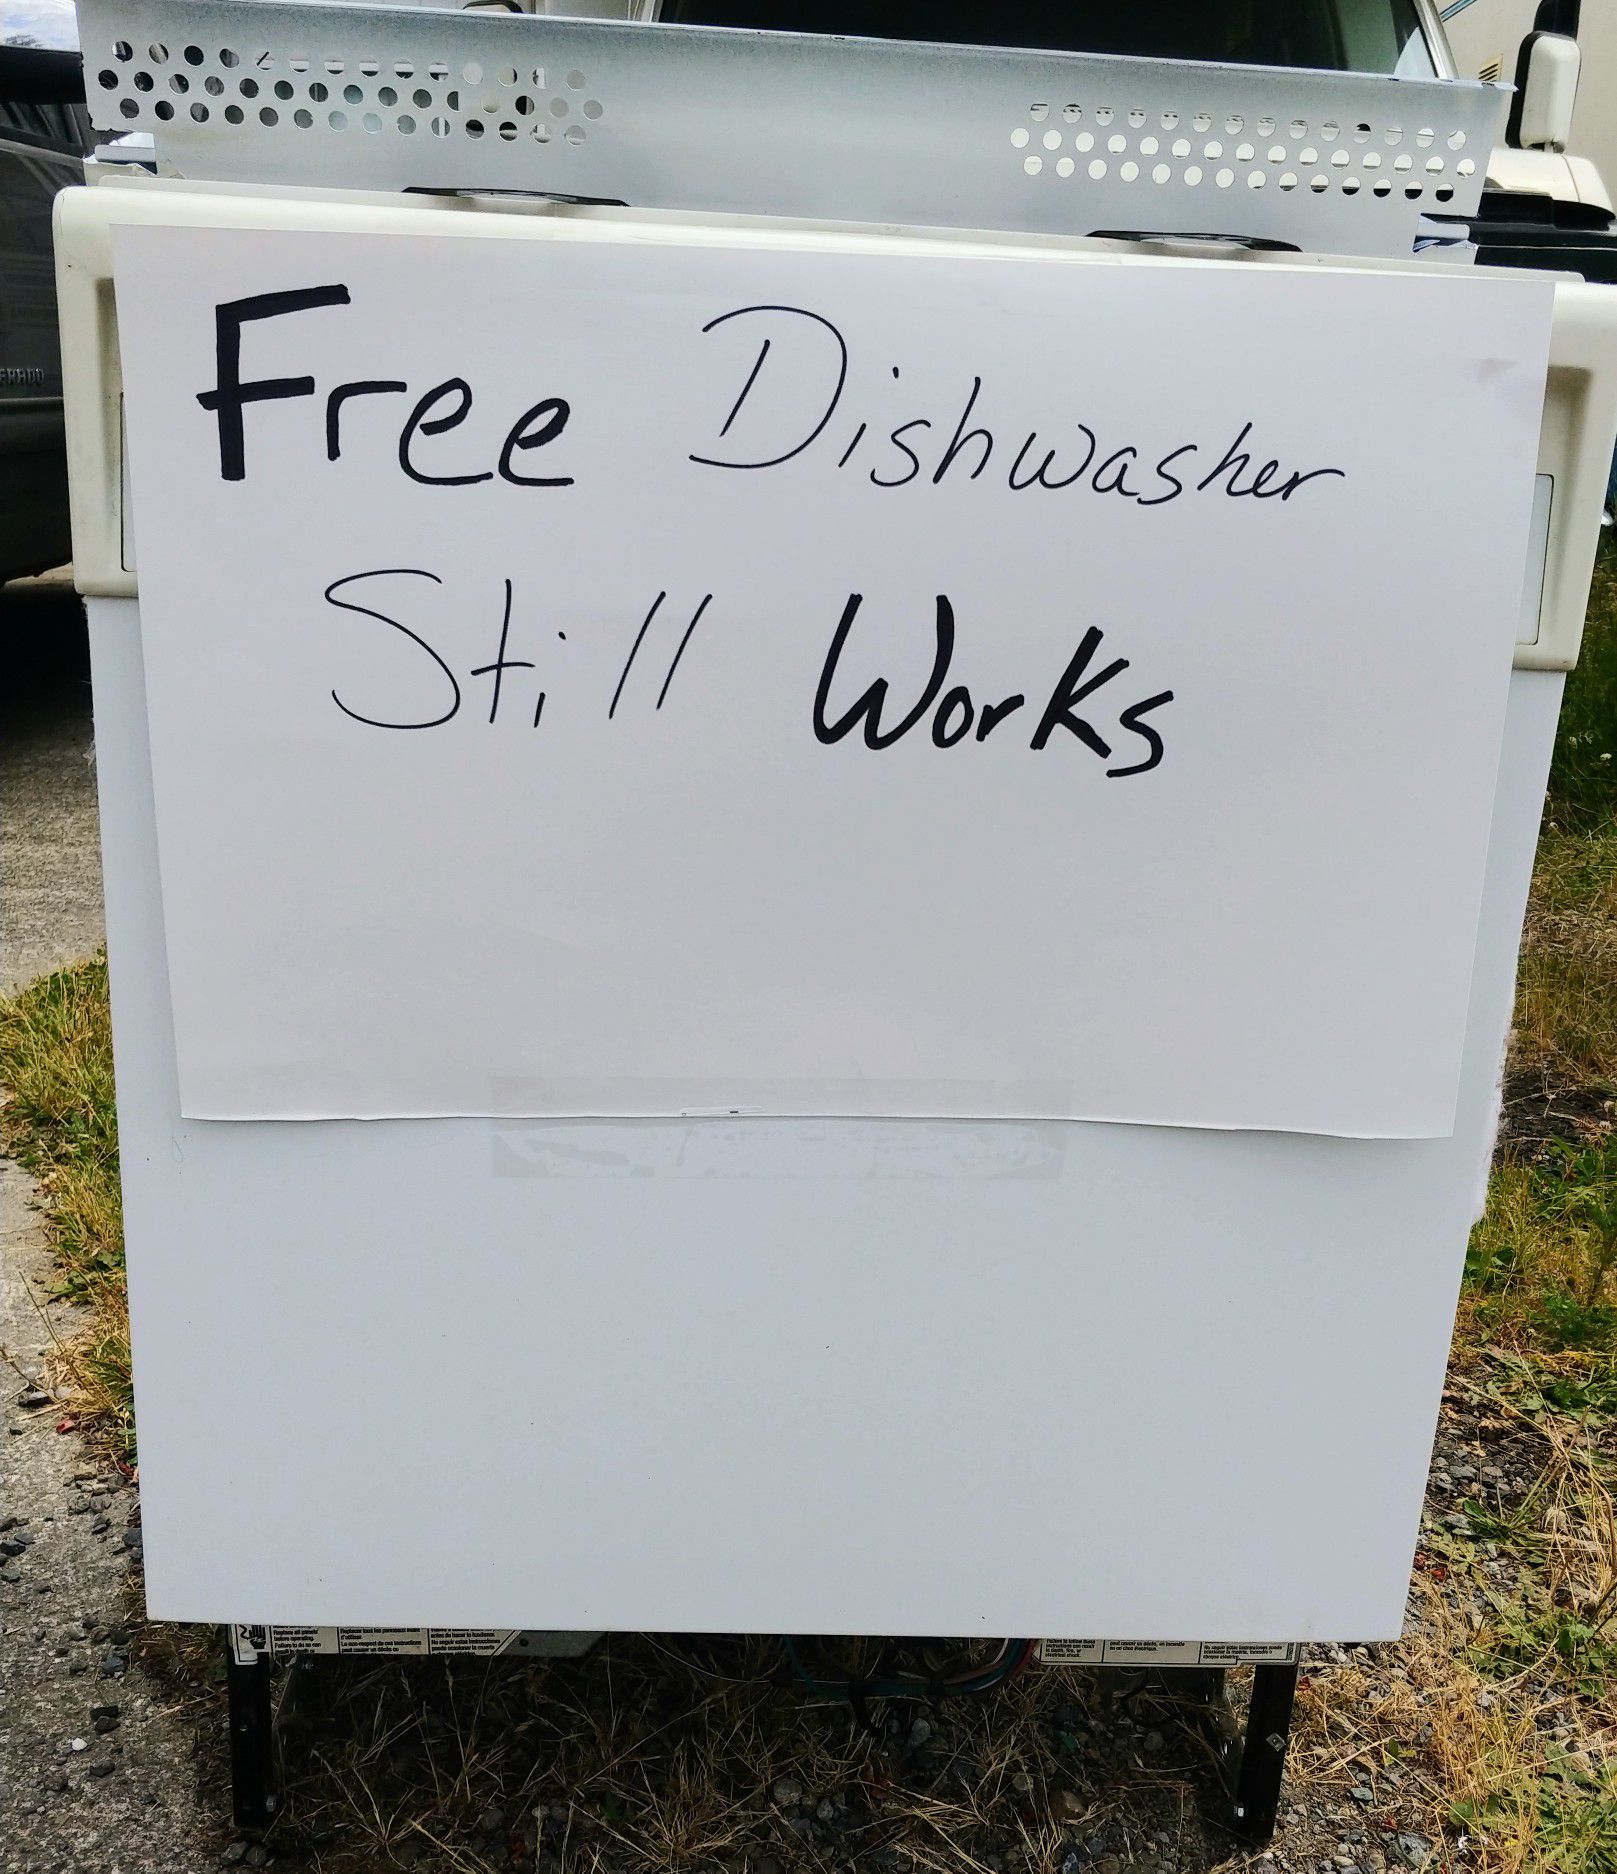 Free Dishwasher. Still works!